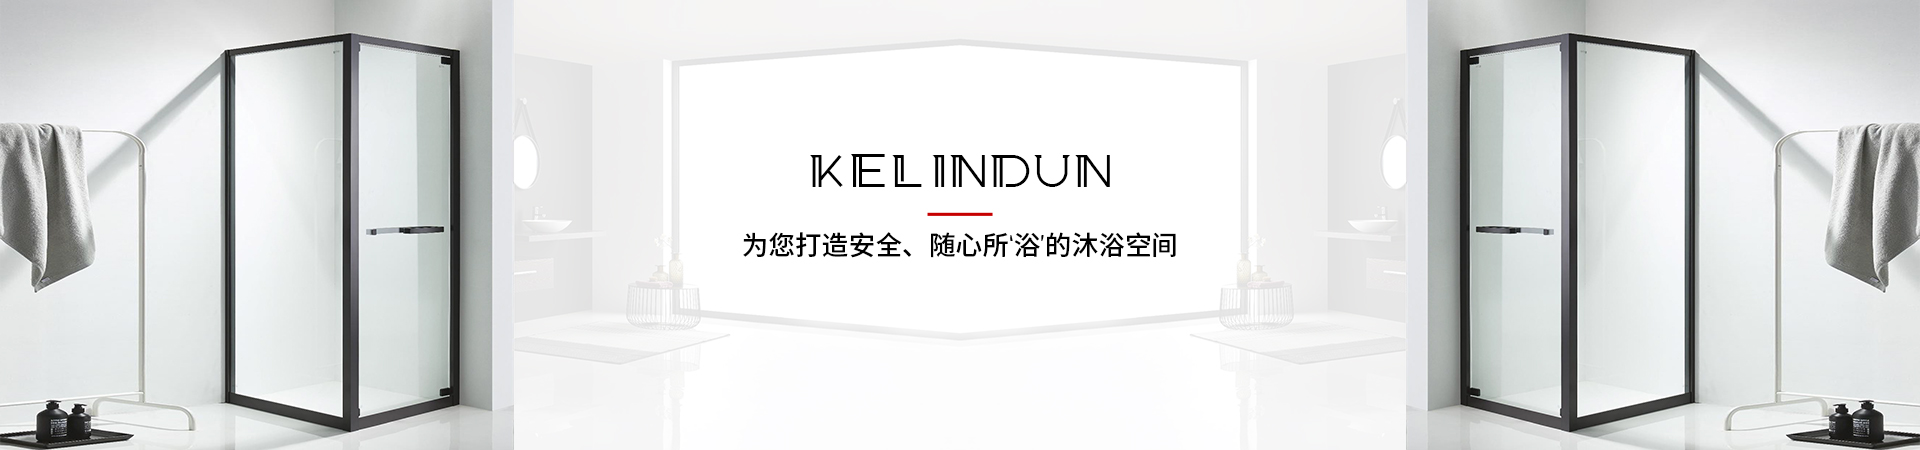 https://www.kelindun.com.cn/data/upload/202011/20201111143135_641.jpg